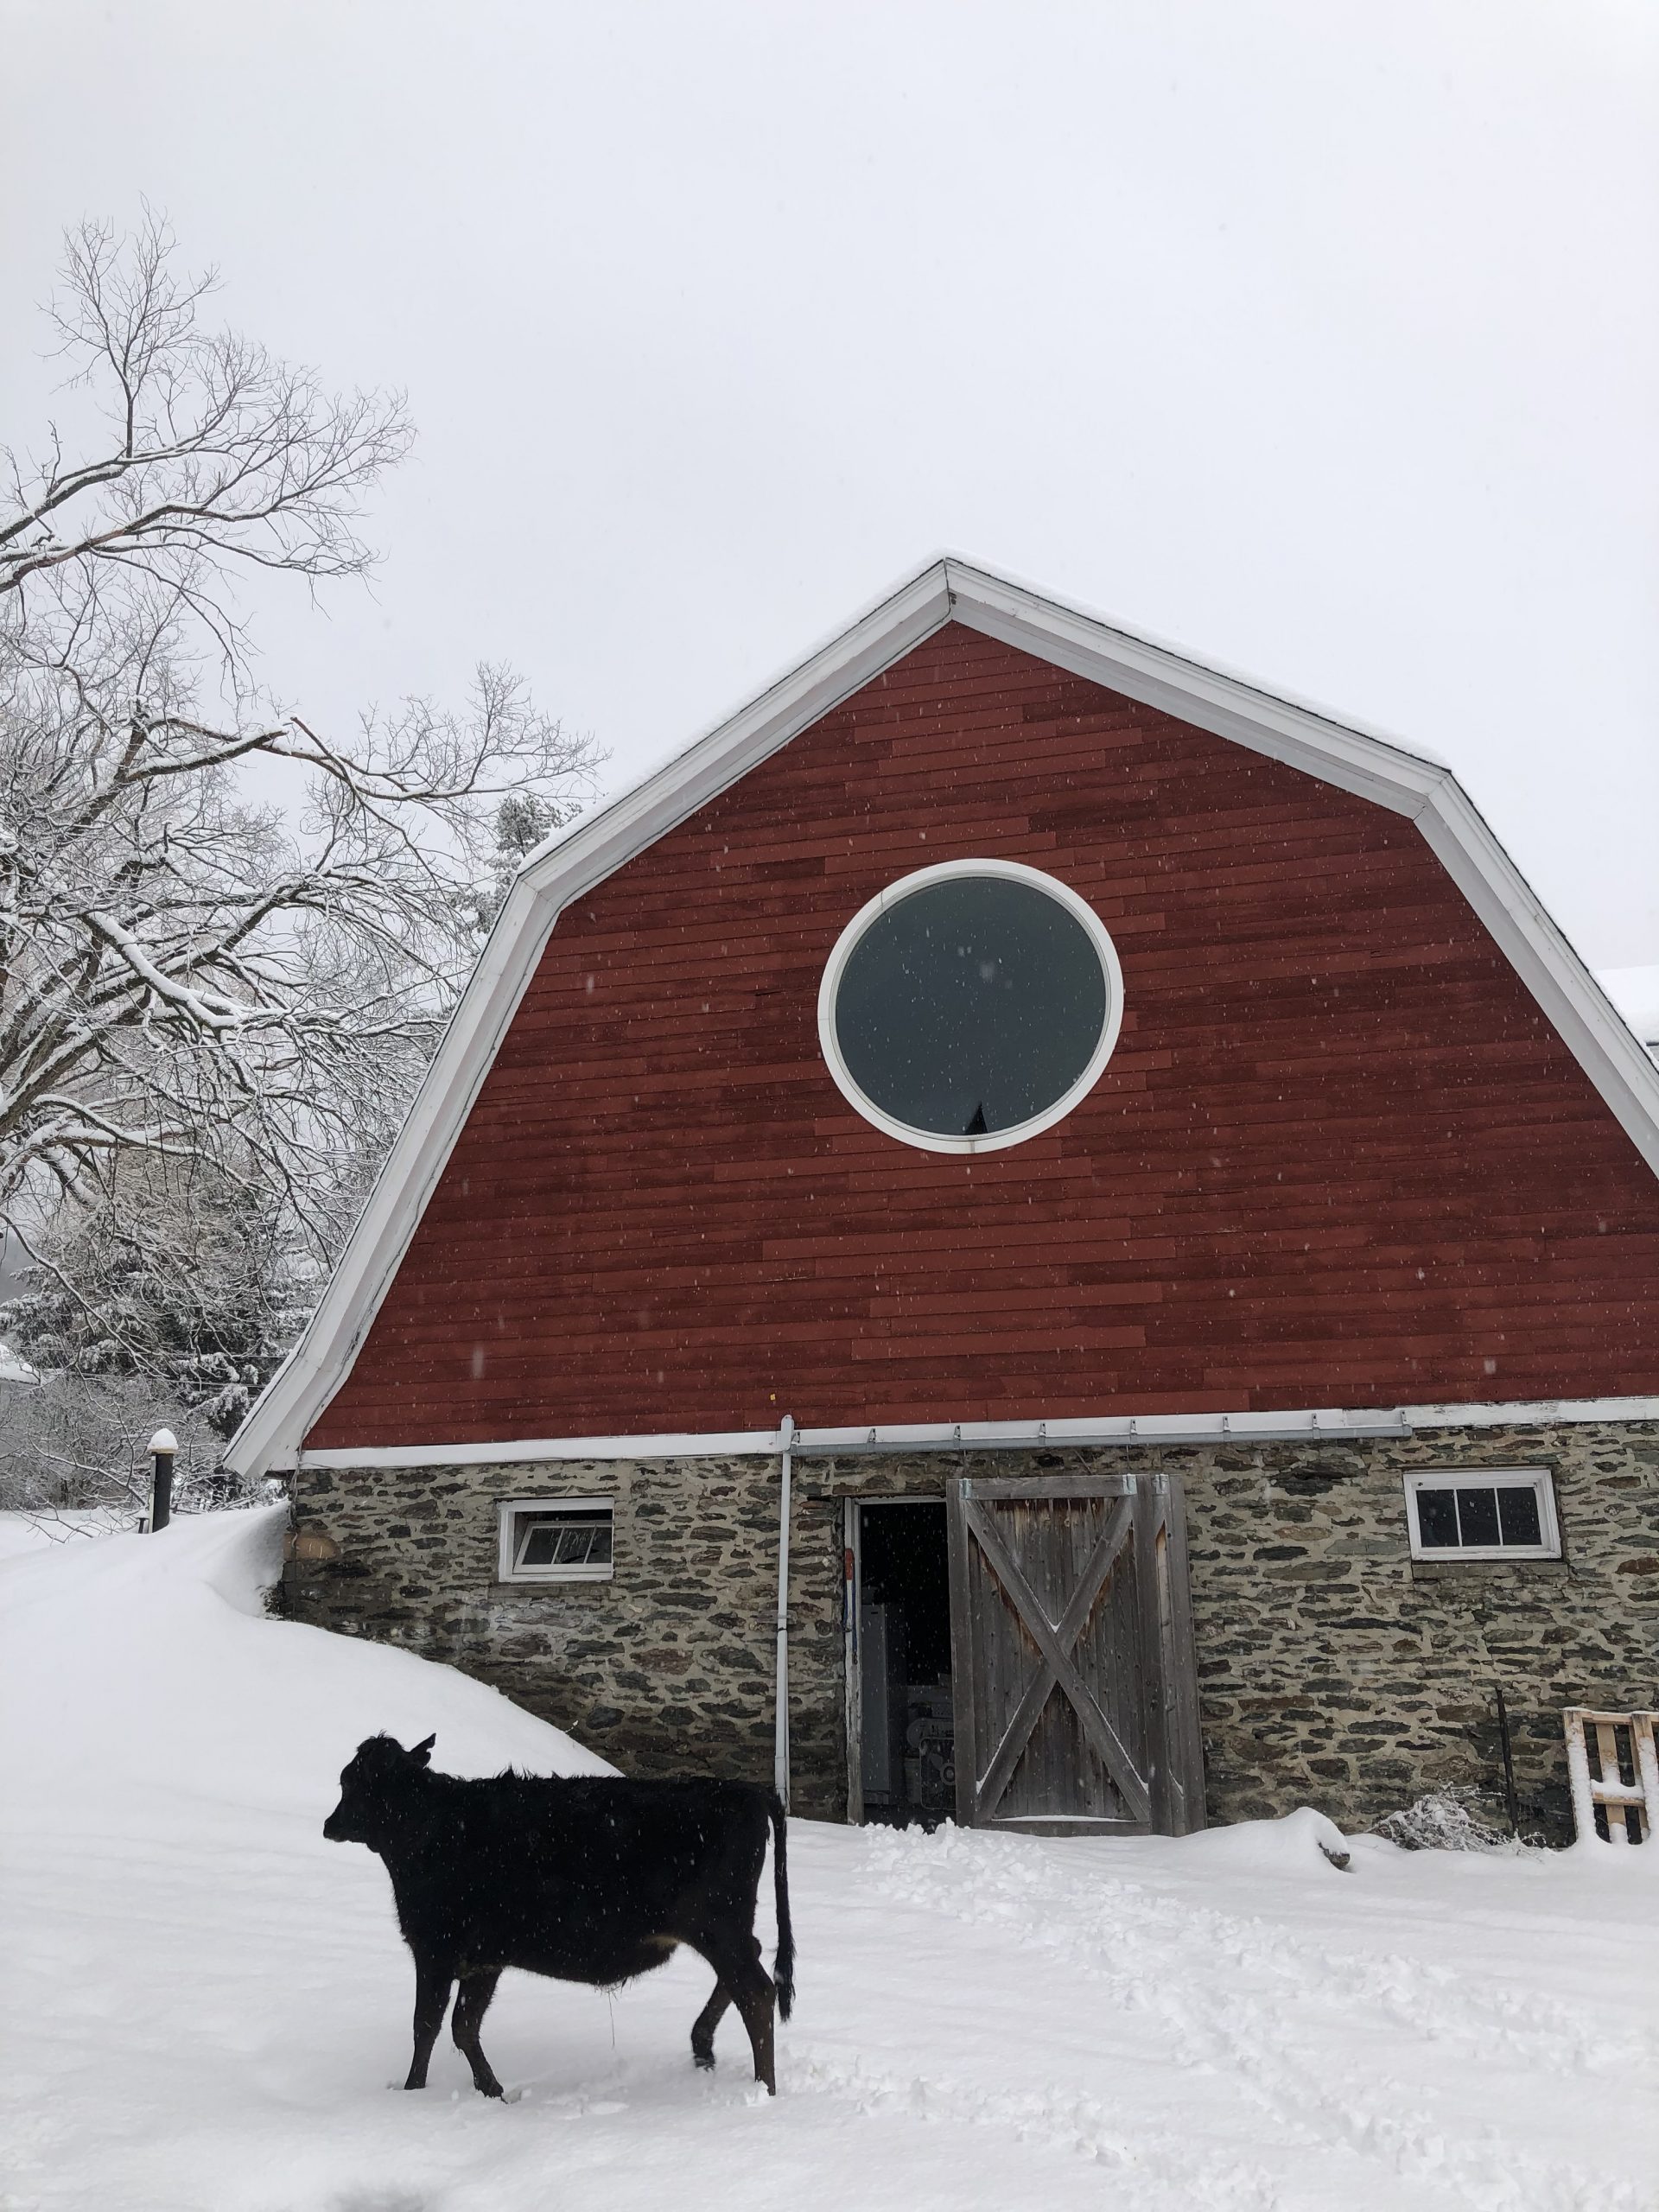 The Stone Barn in winter